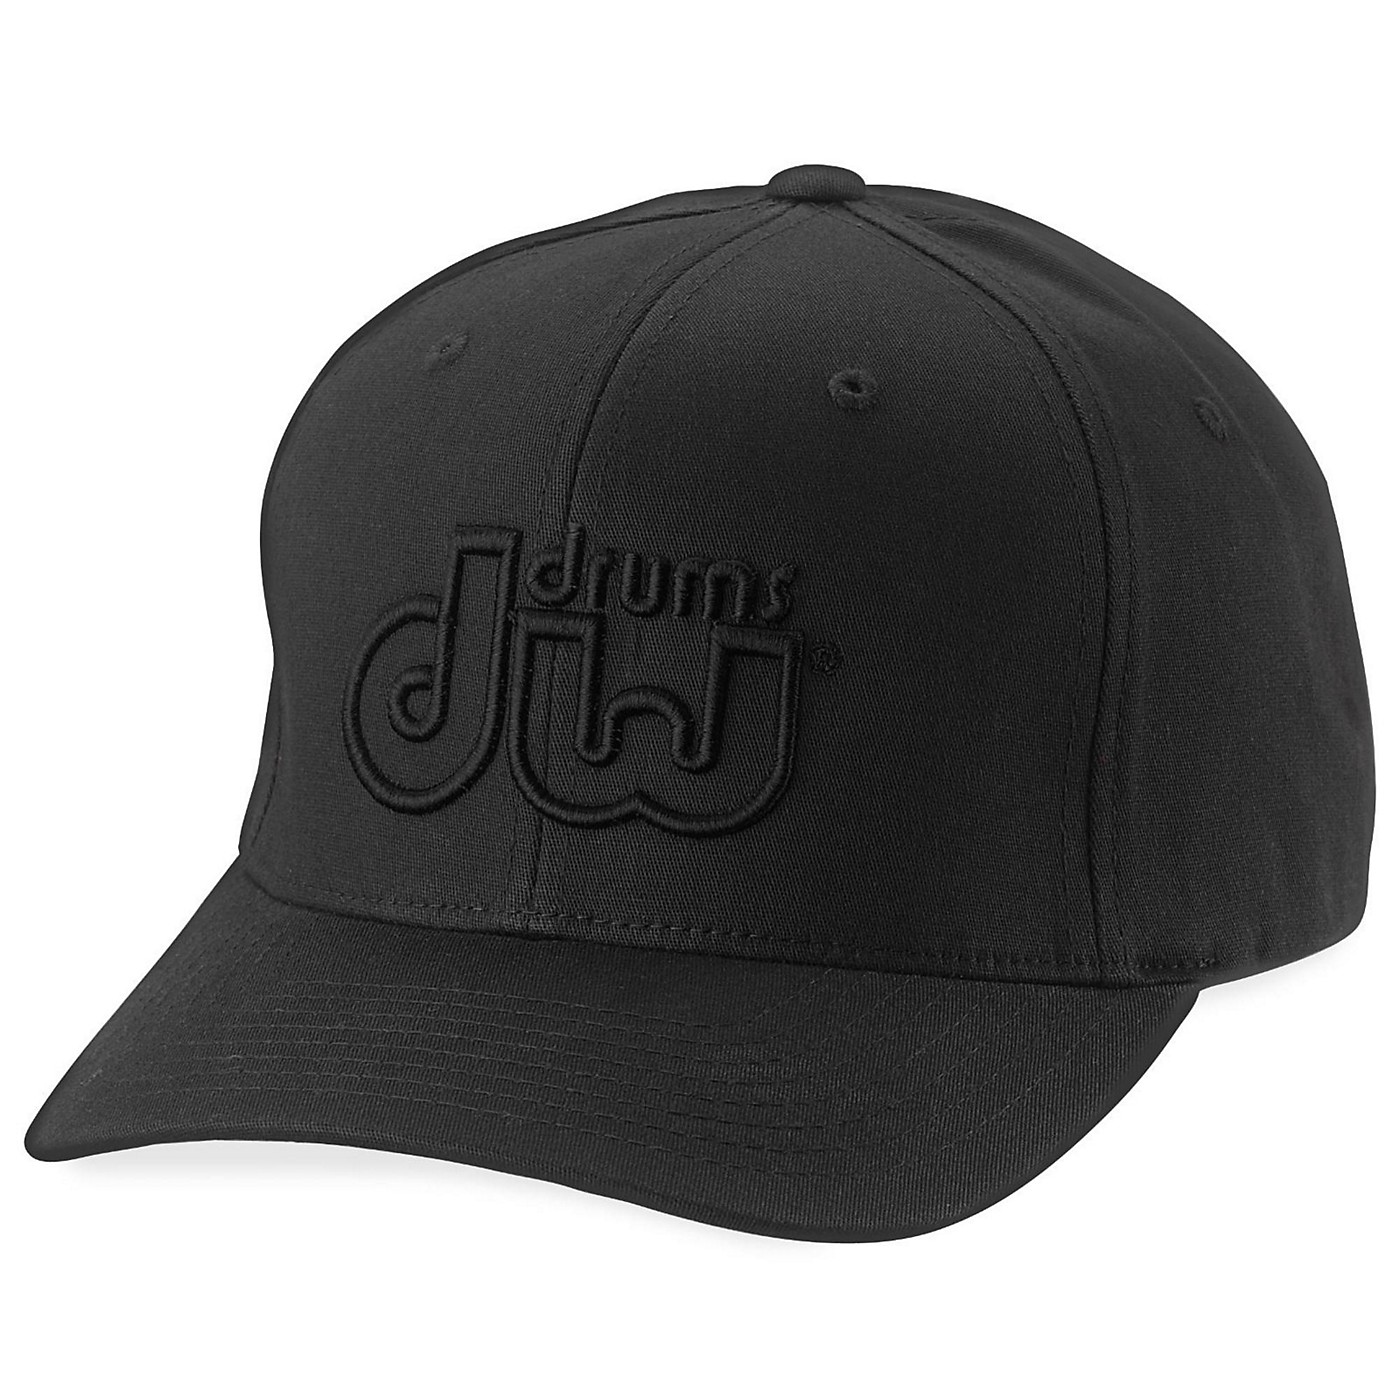 DW Performance Hat Black On Black Small/Medium thumbnail